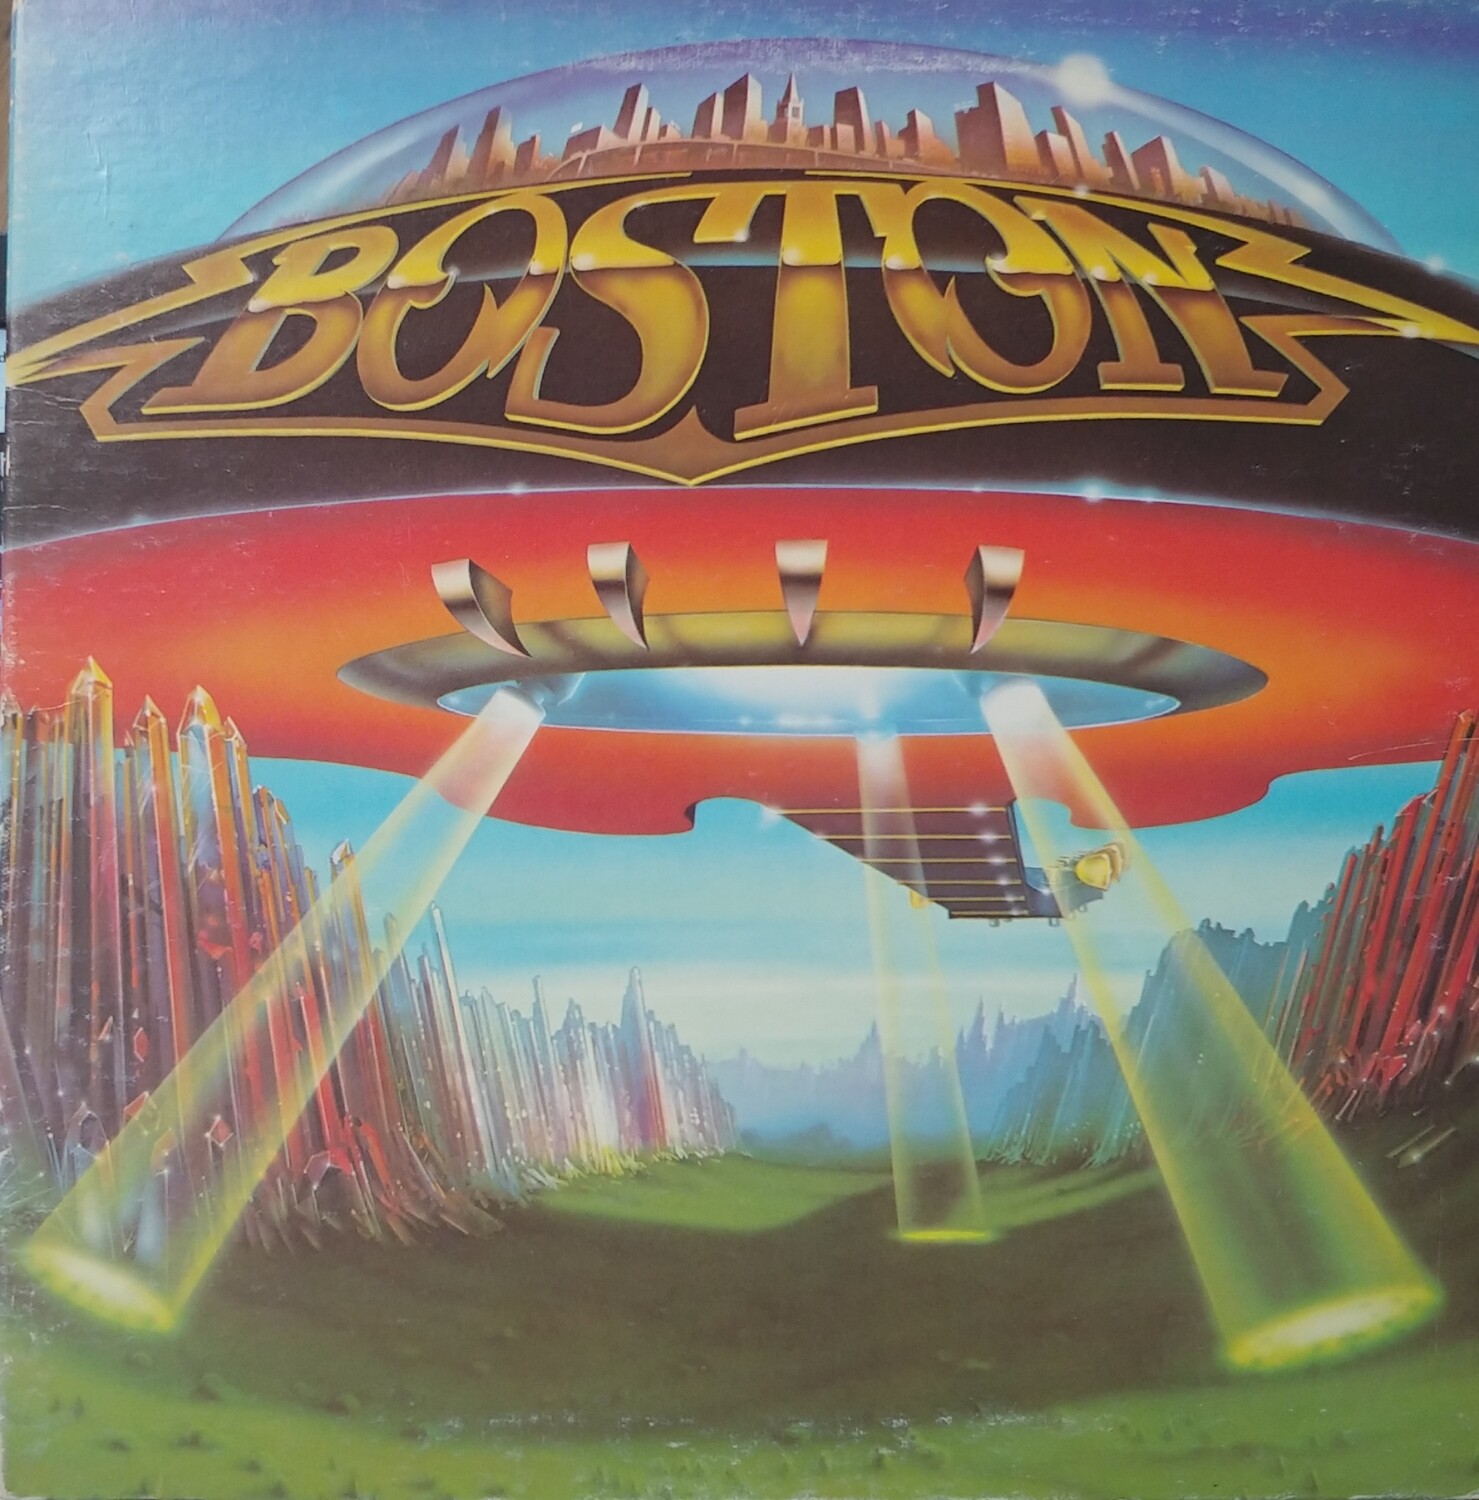 Boston - Don't look back